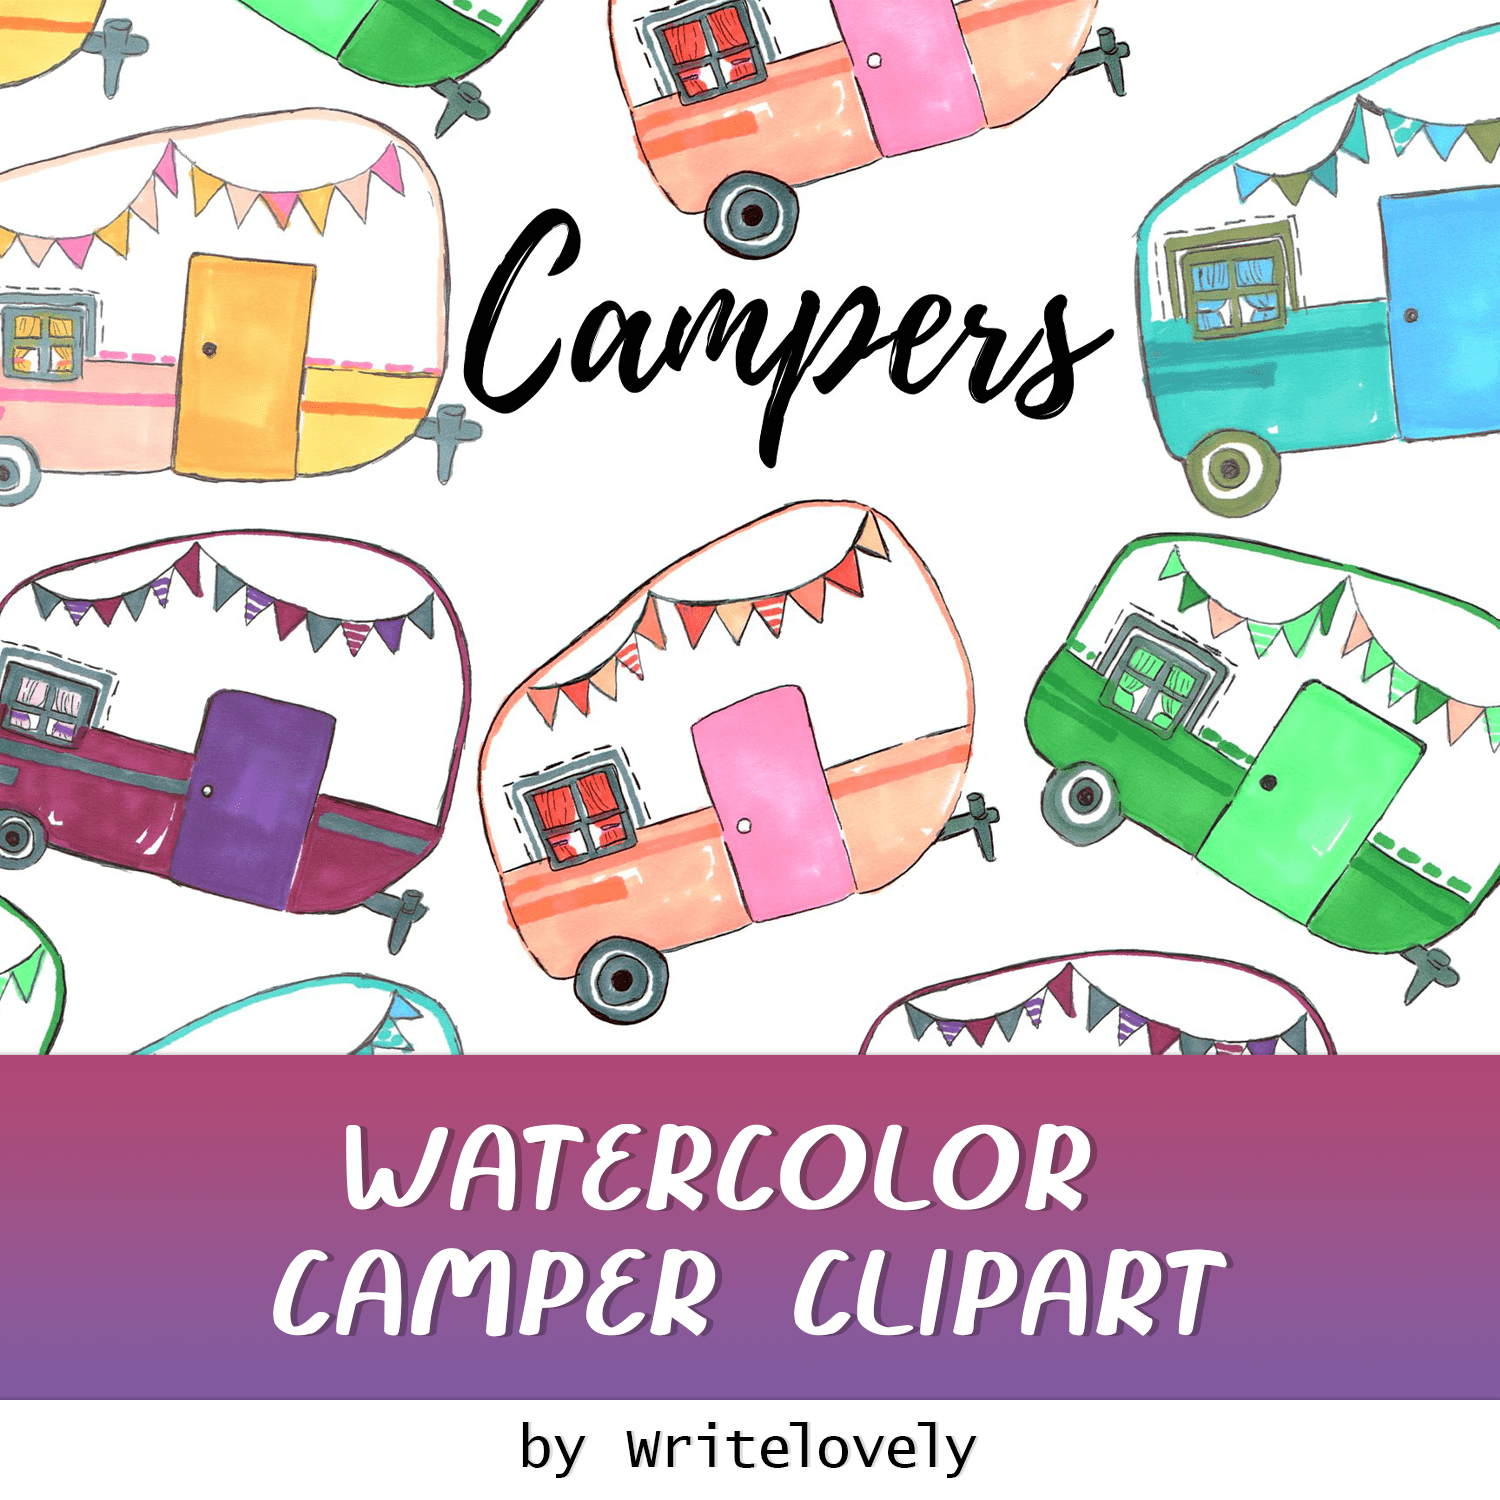 Watercolor Camper Clipart cover.